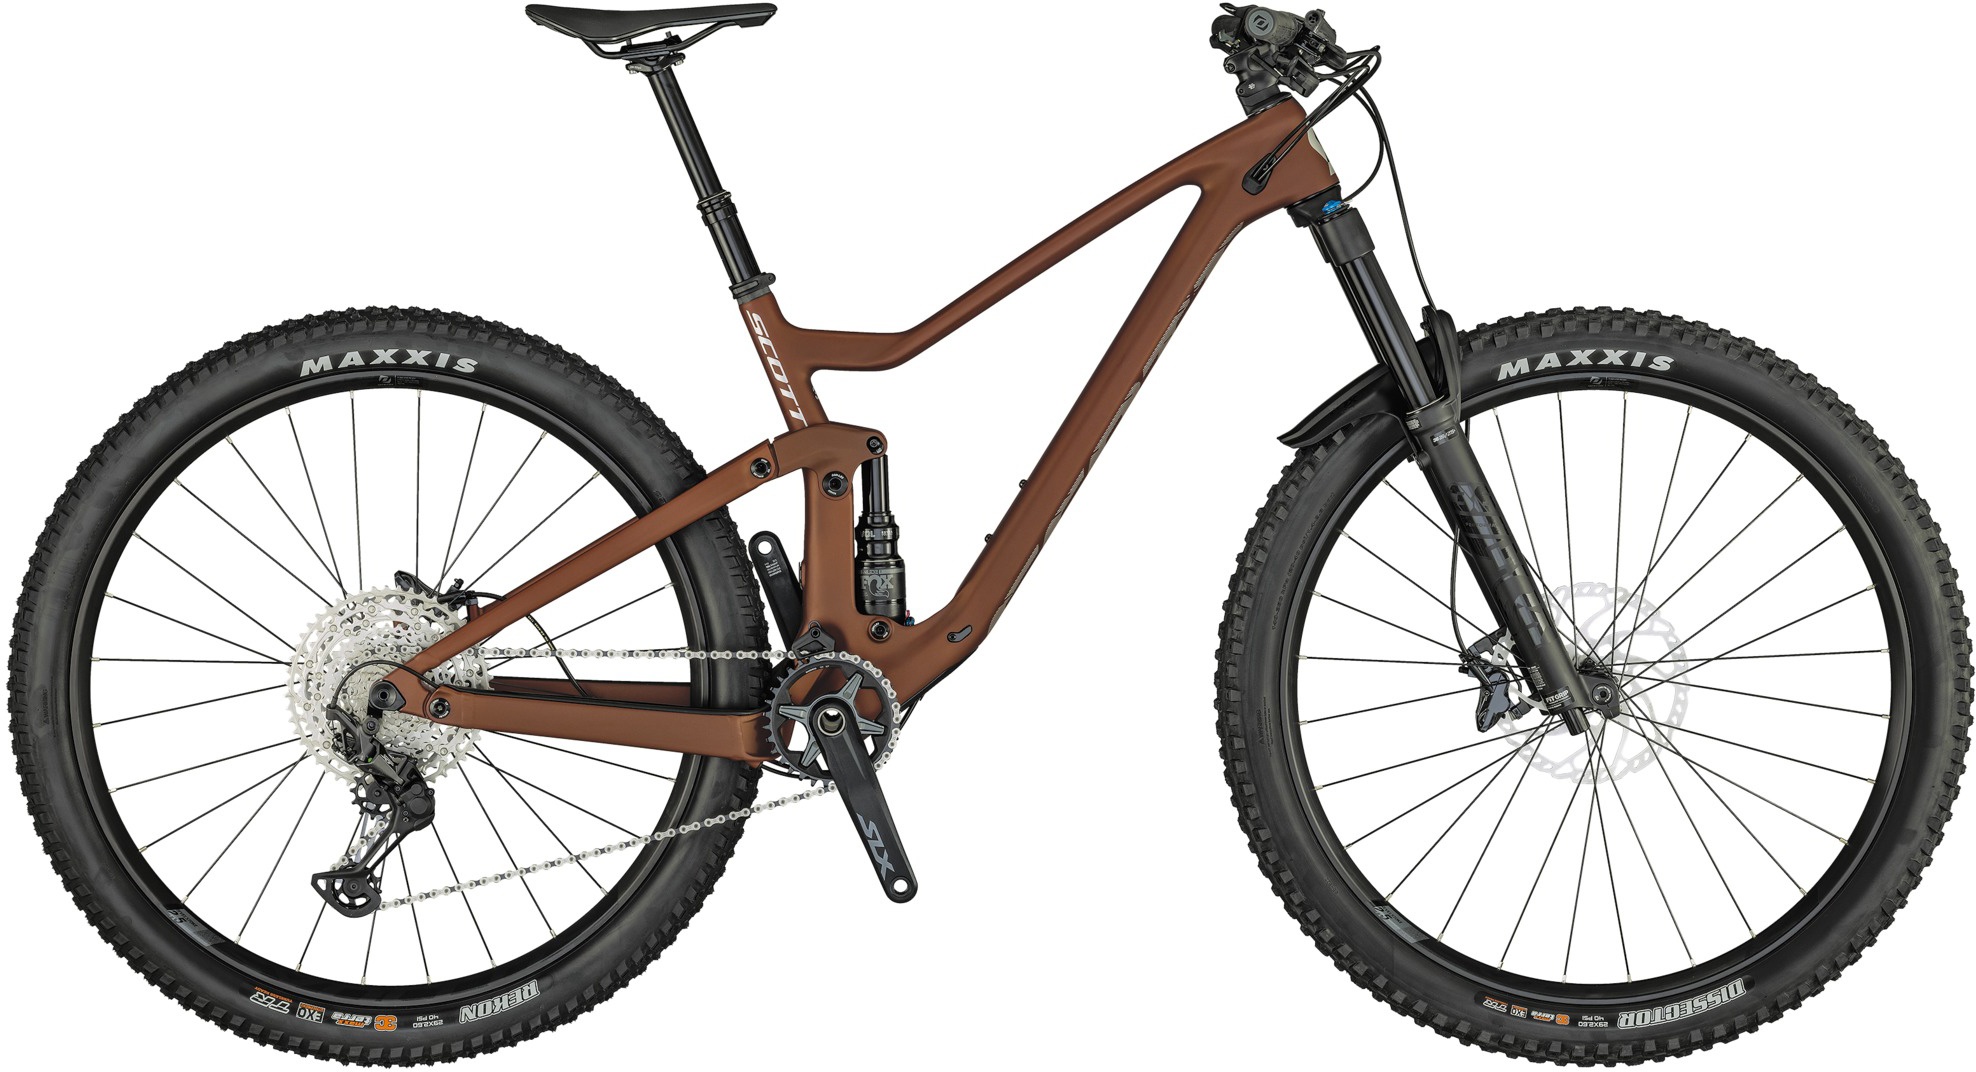 Cykler - Mountainbikes - SCOTT Genius 930 2021 (Udstillingsmodel)